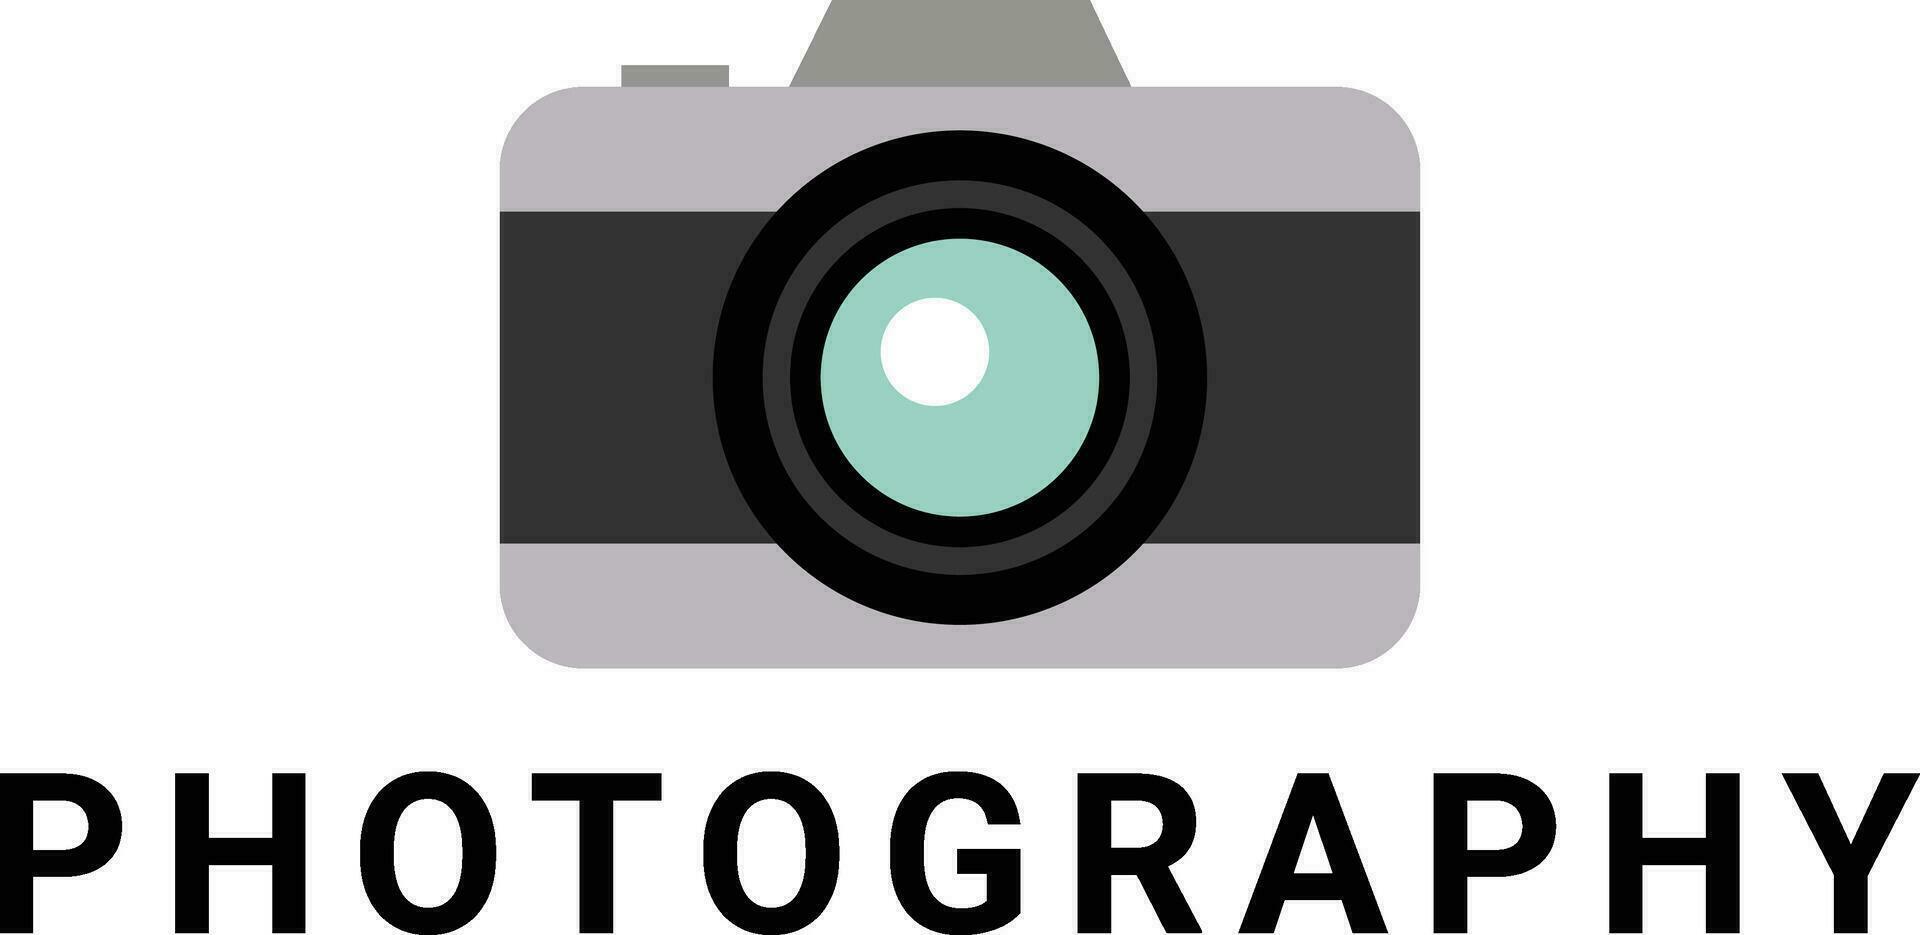 fotografering logotyp design vektor